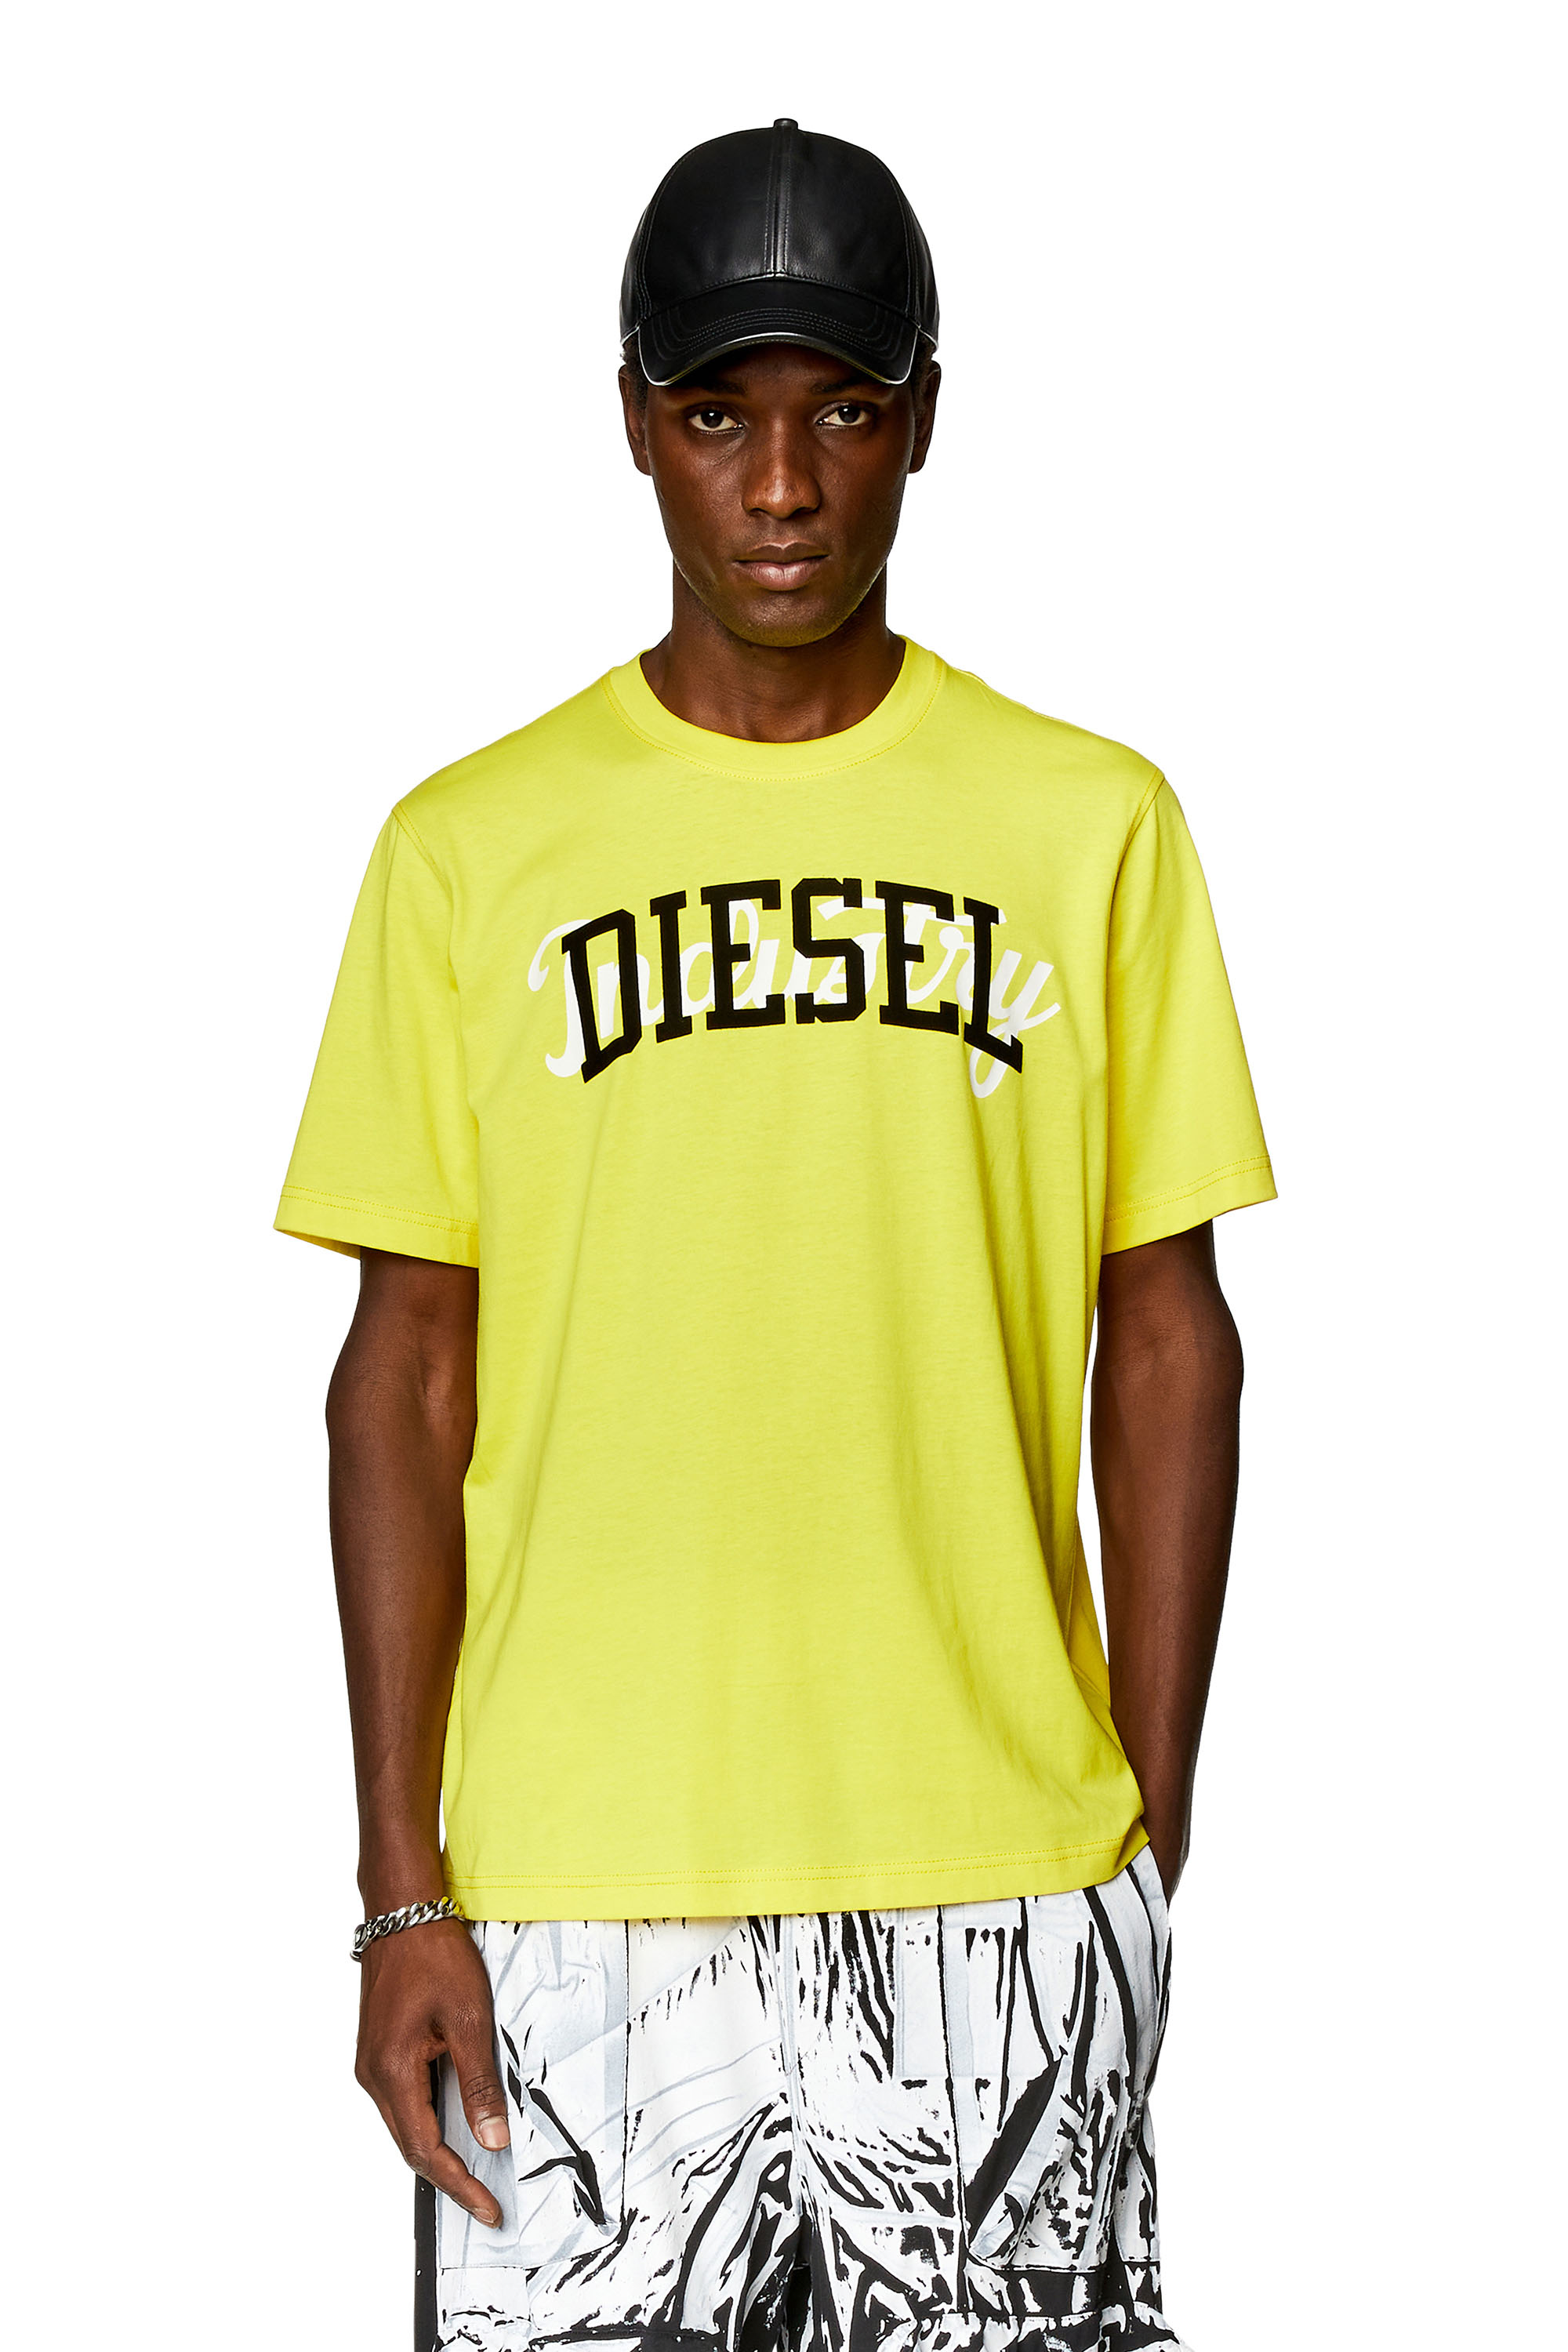 Diesel - T-JUST-N10, Man T-shirt with contrasting Diesel prints in Yellow - Image 1